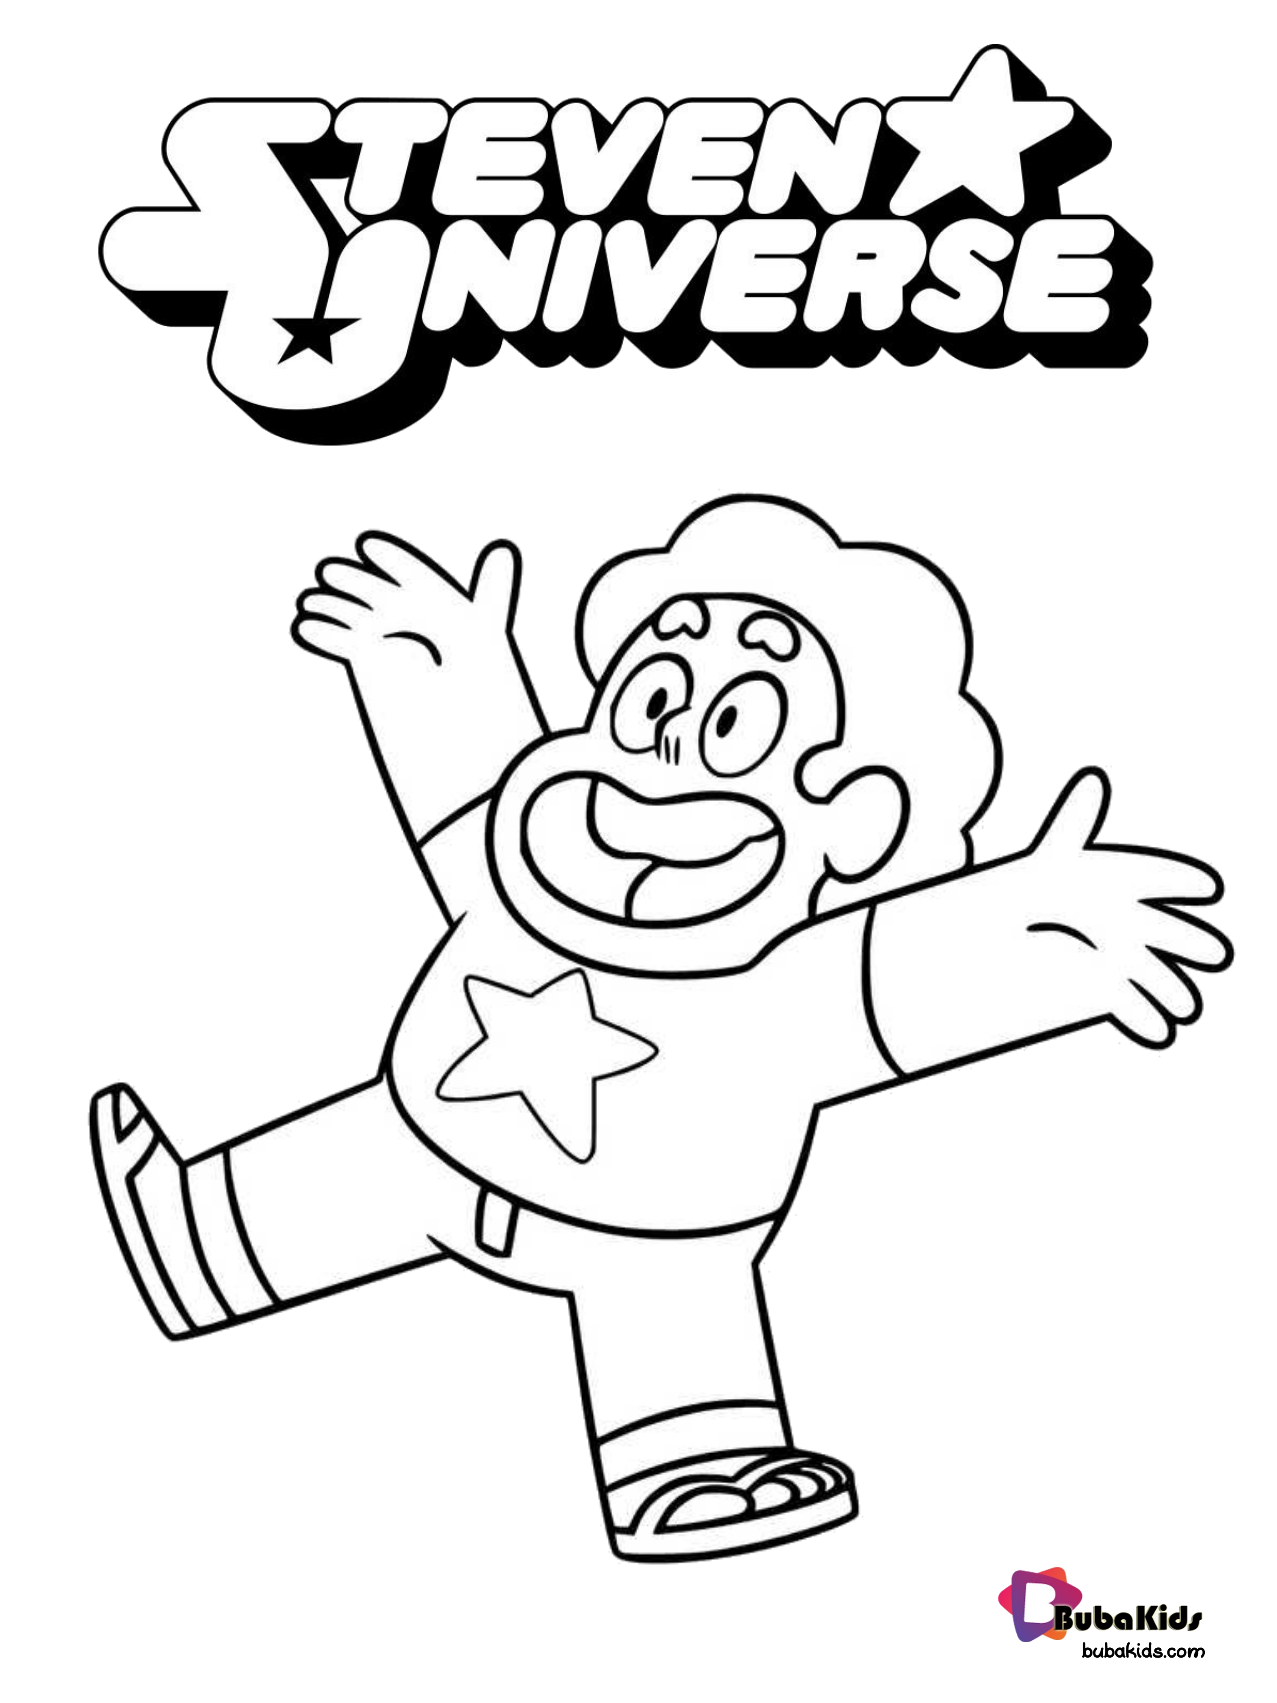 Bubakidscoloringpages — Steven Universe coloring page. free download,...